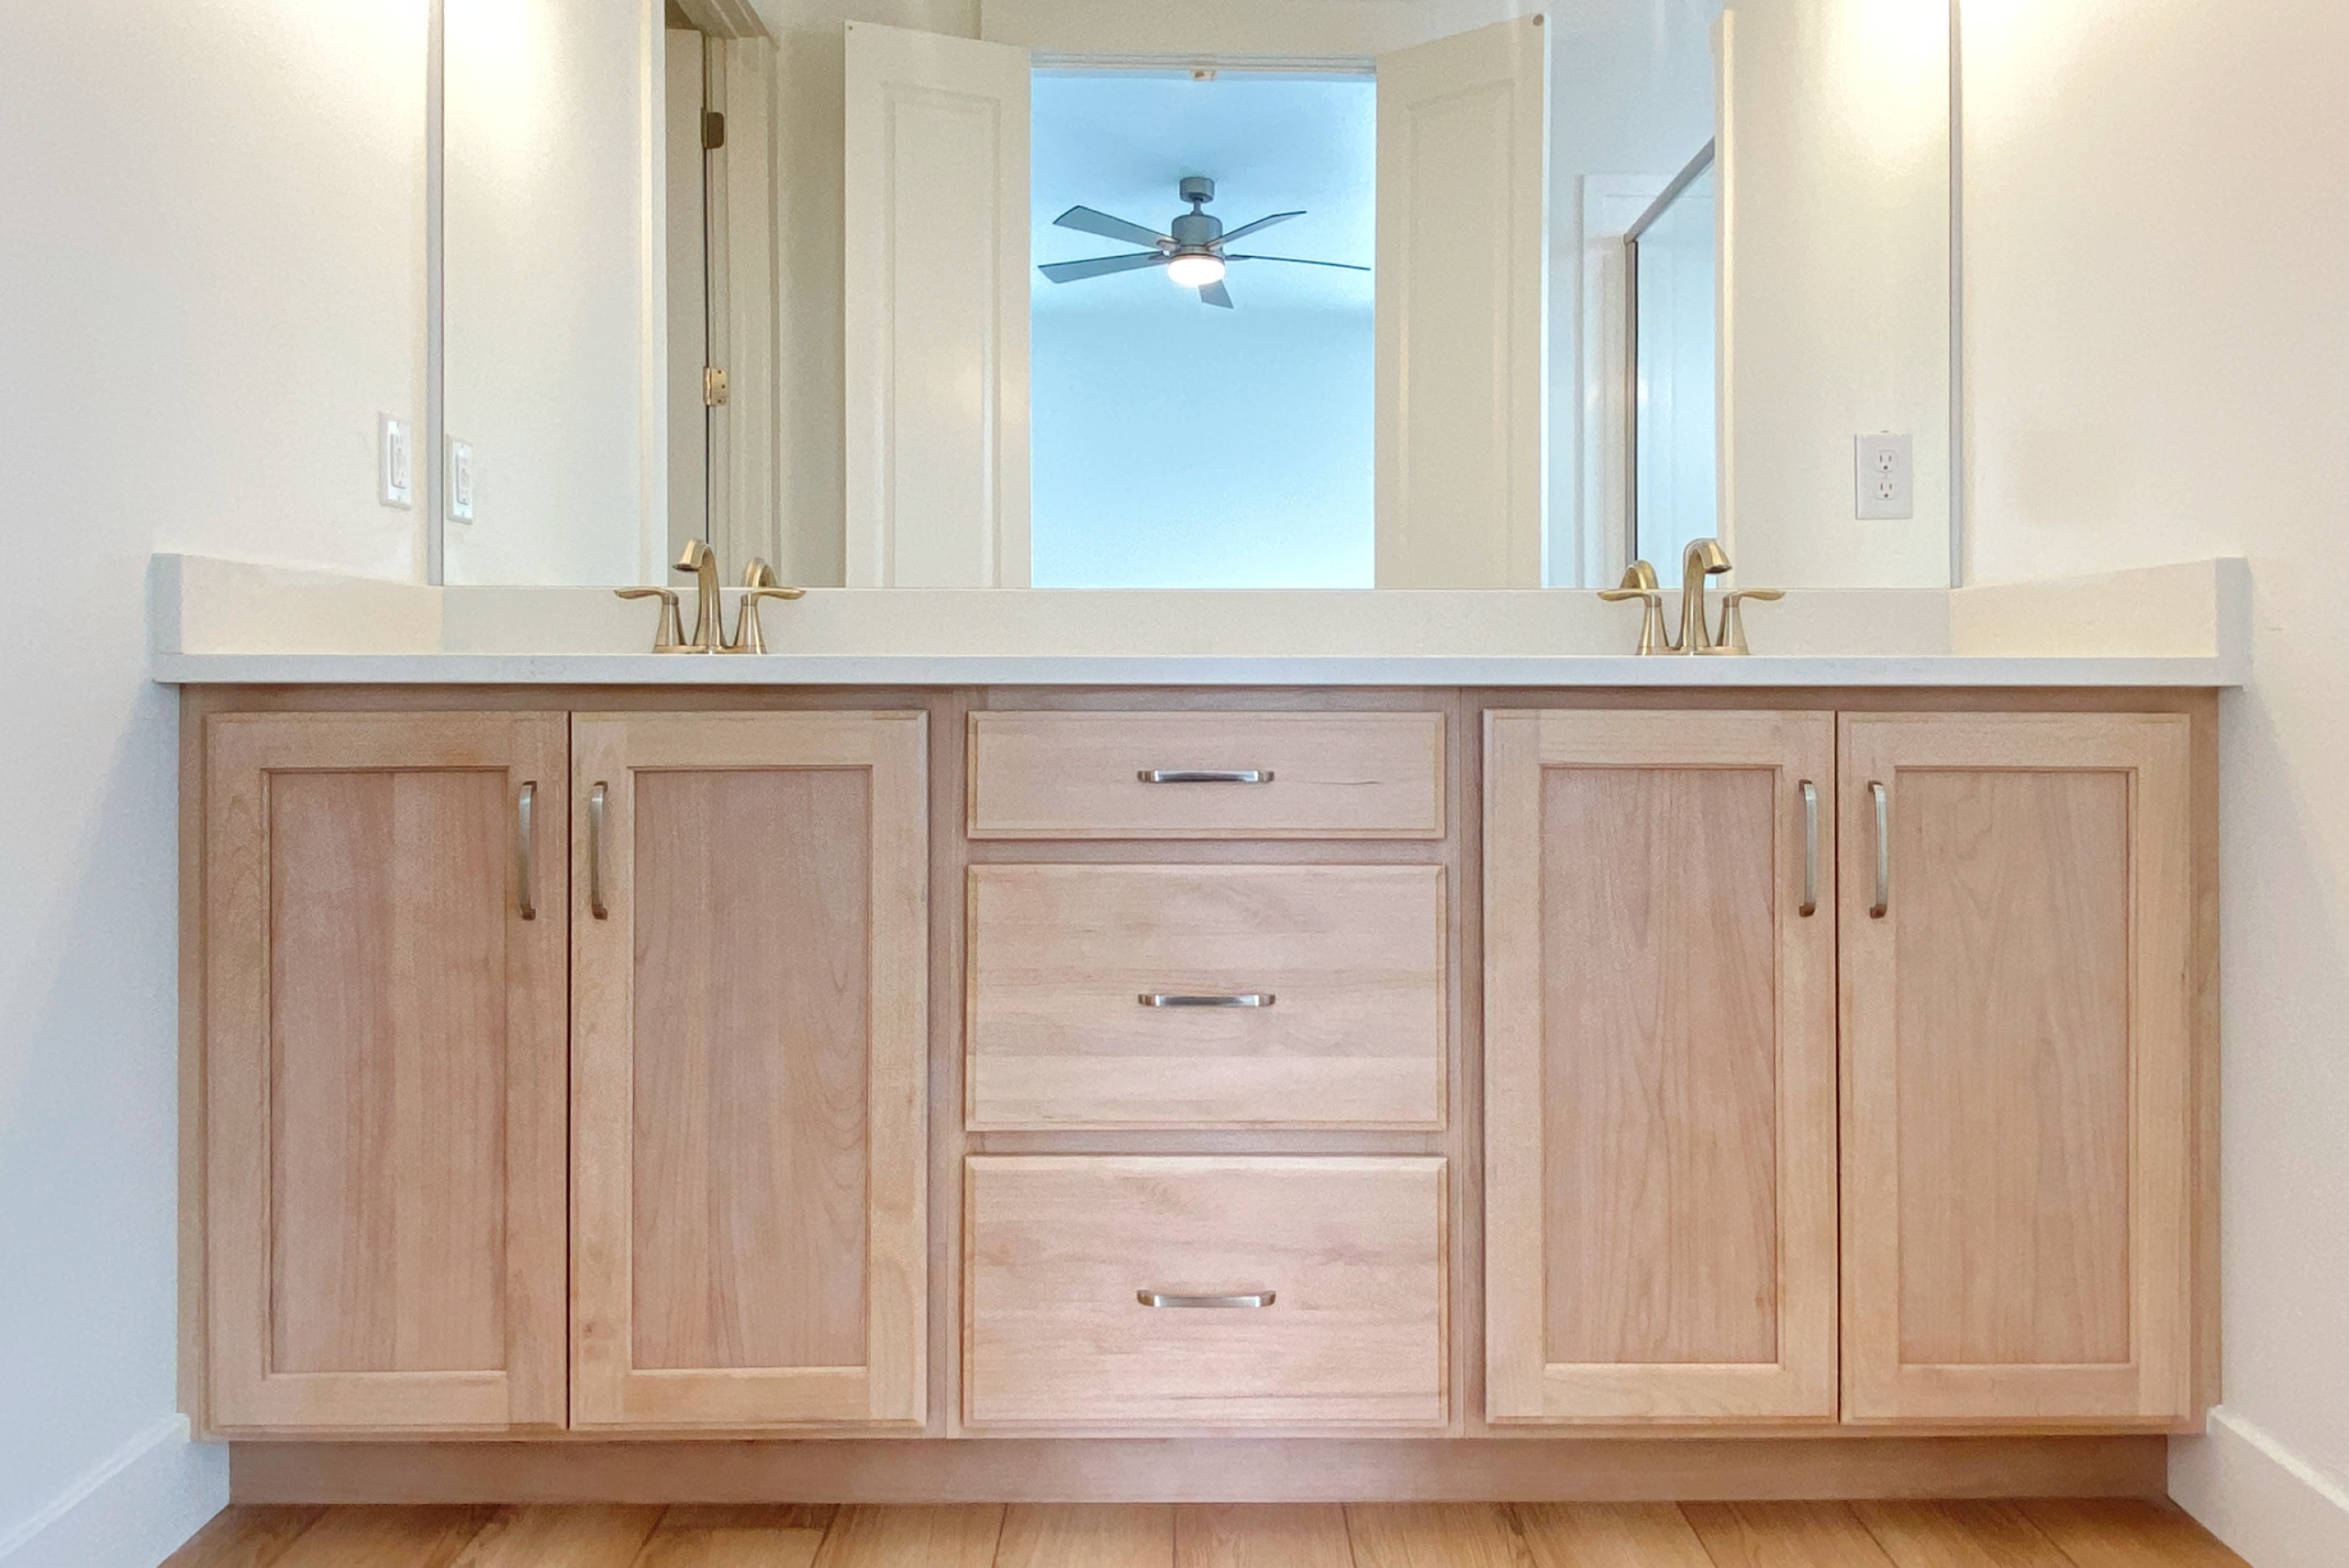 WR36 - Website - Master Bath Cabinets